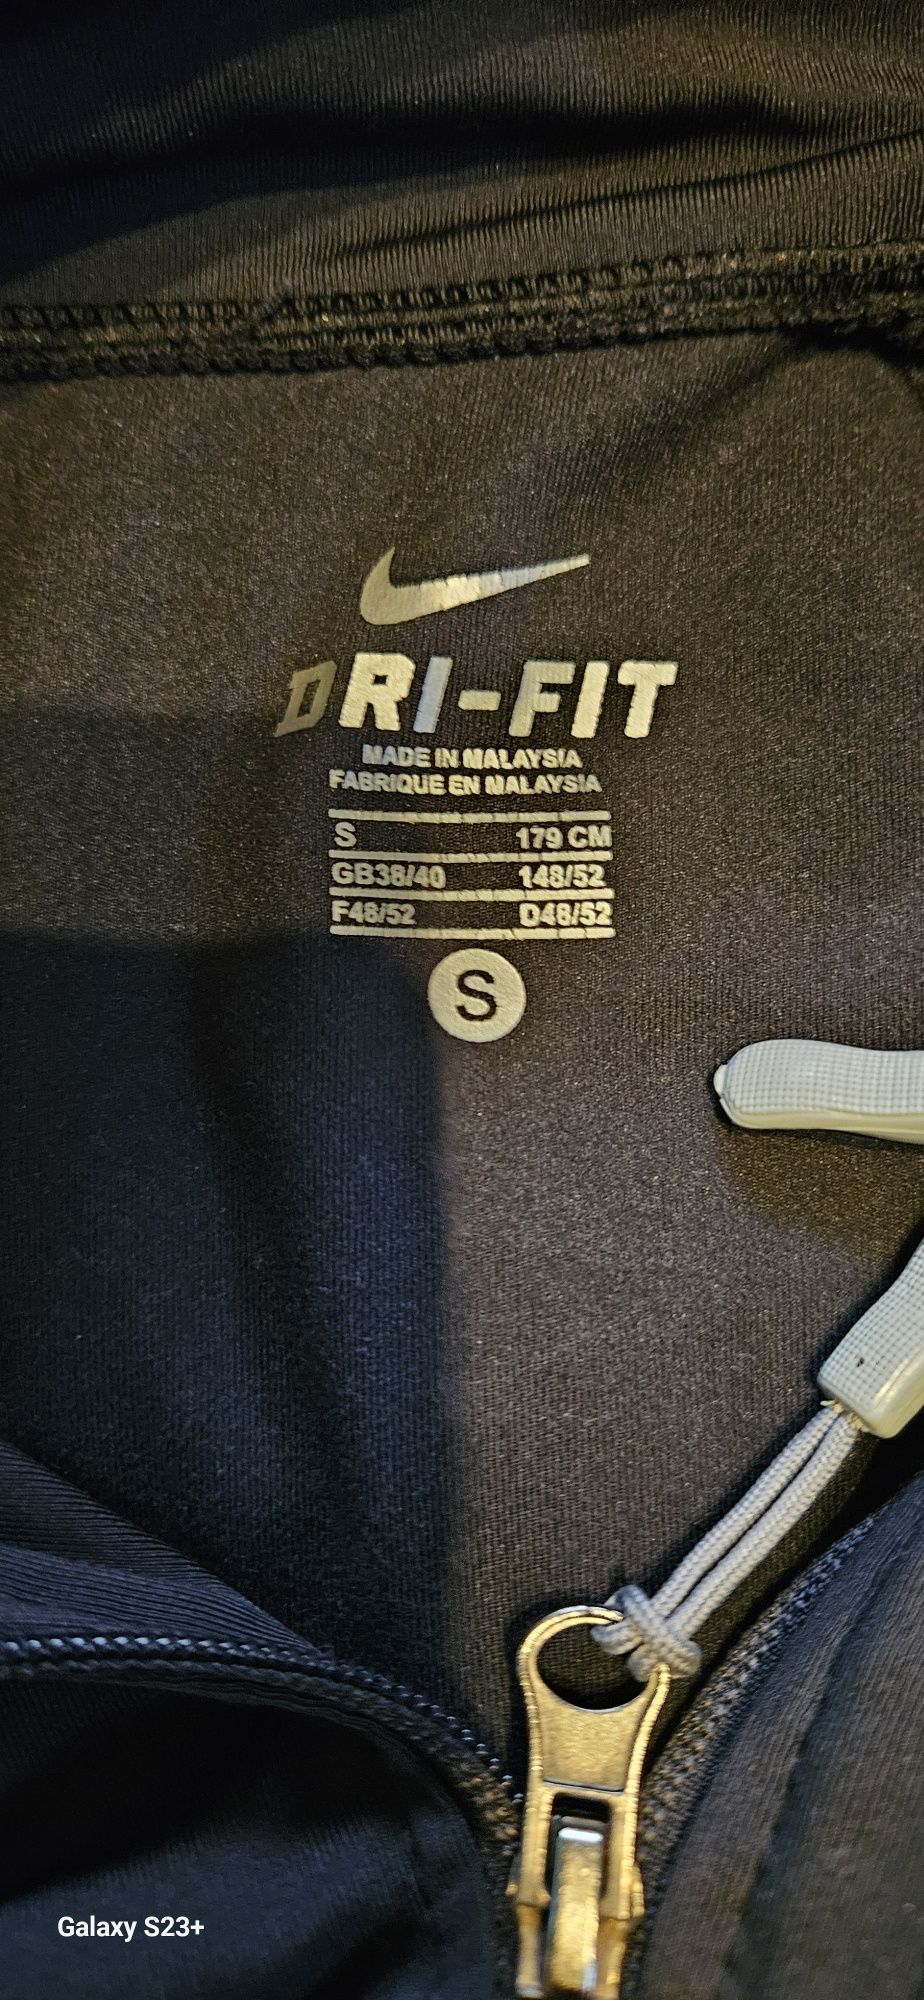 Bluza Nike Dry-fit